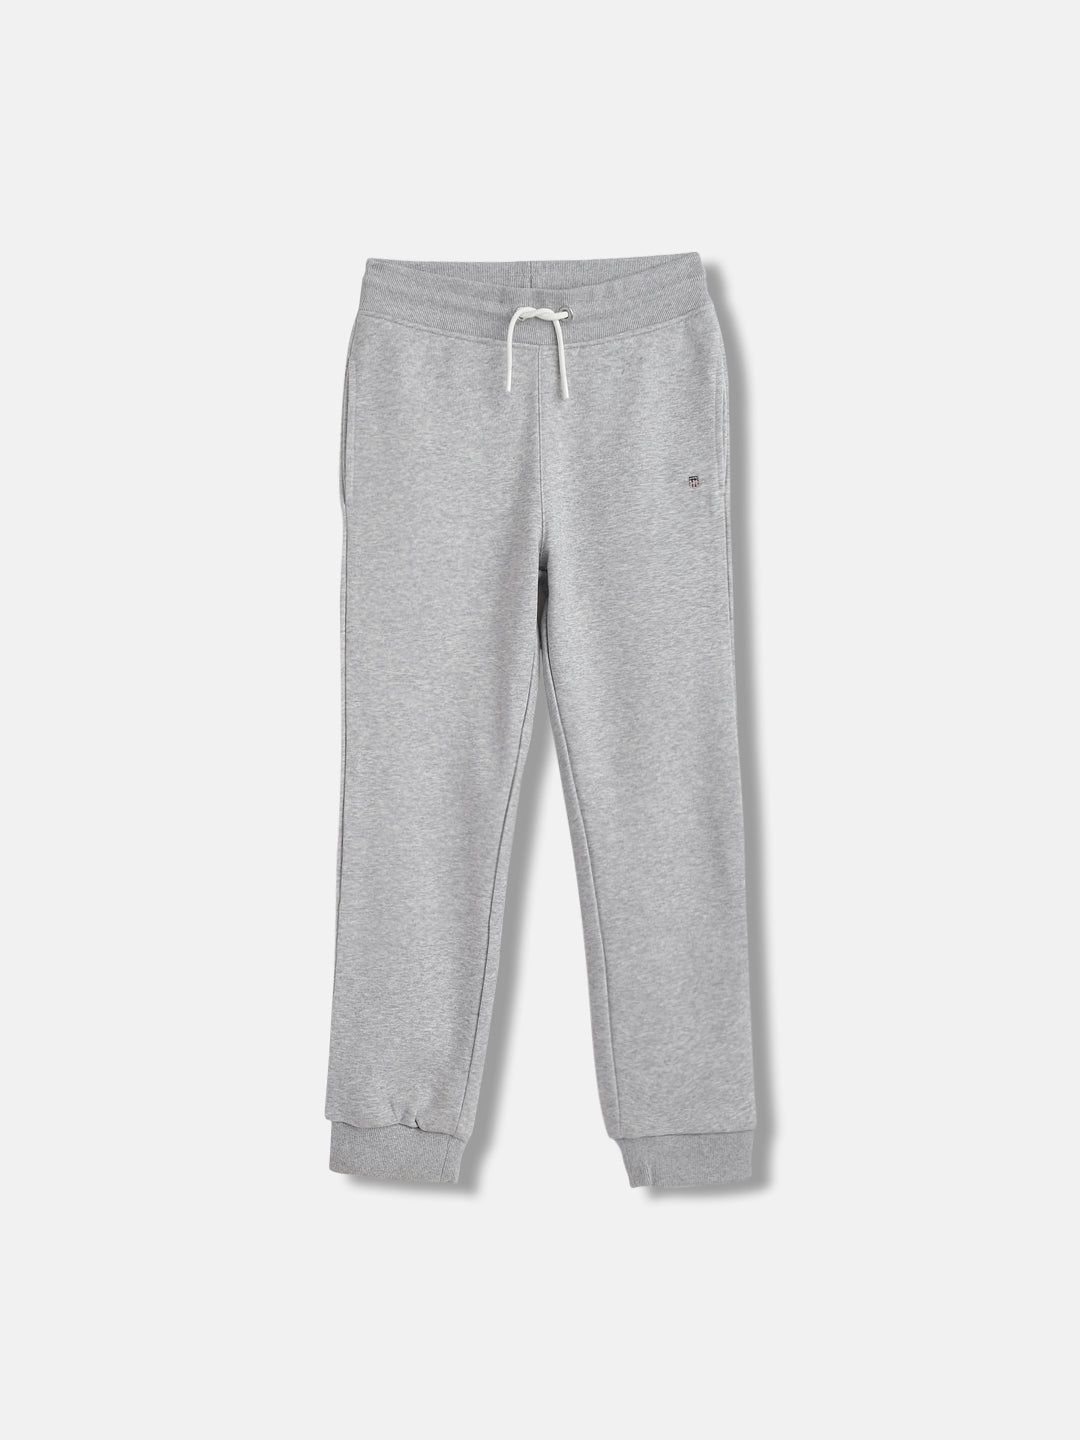 Gant Boys Grey Solid Regular Fit Sweatpant